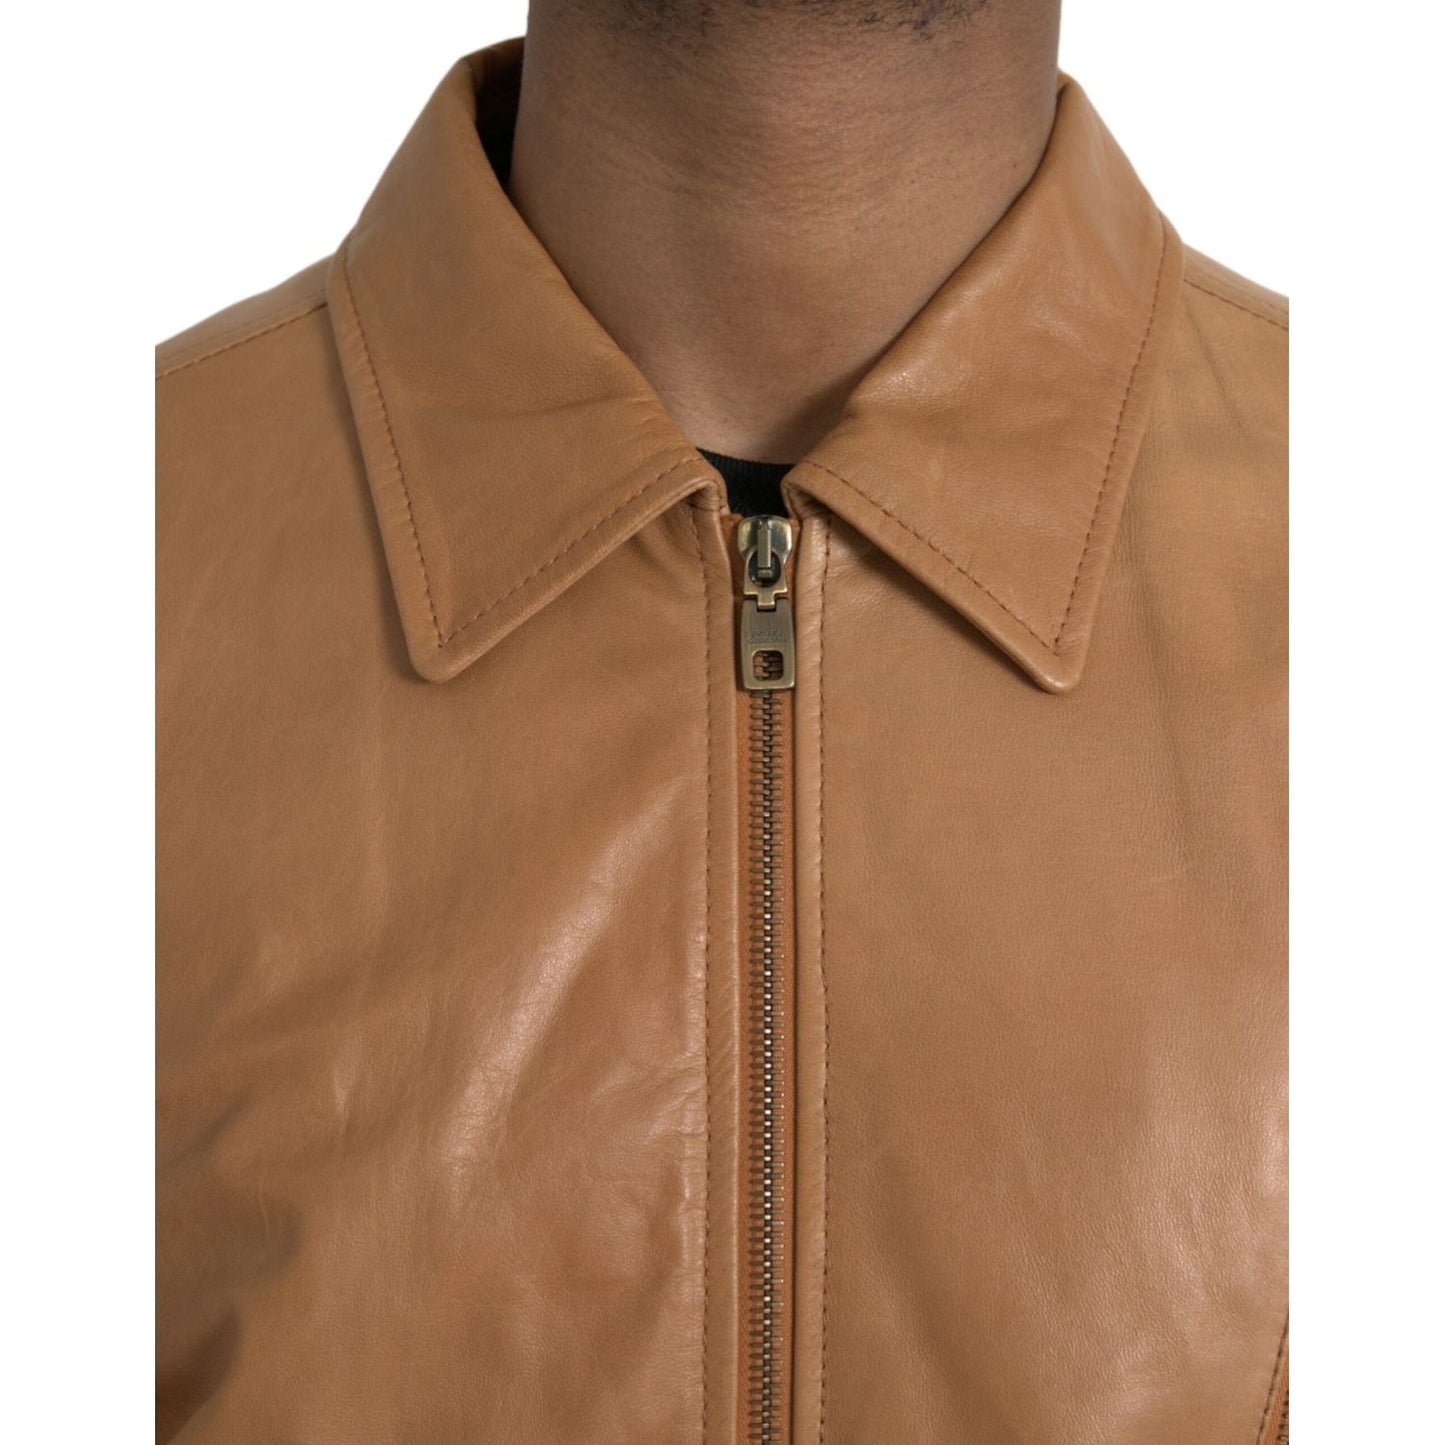 Dolce & Gabbana Brown Lamb Leather Full Zip Blouson Jacket brown-lamb-leather-full-zip-blouson-jacket-1